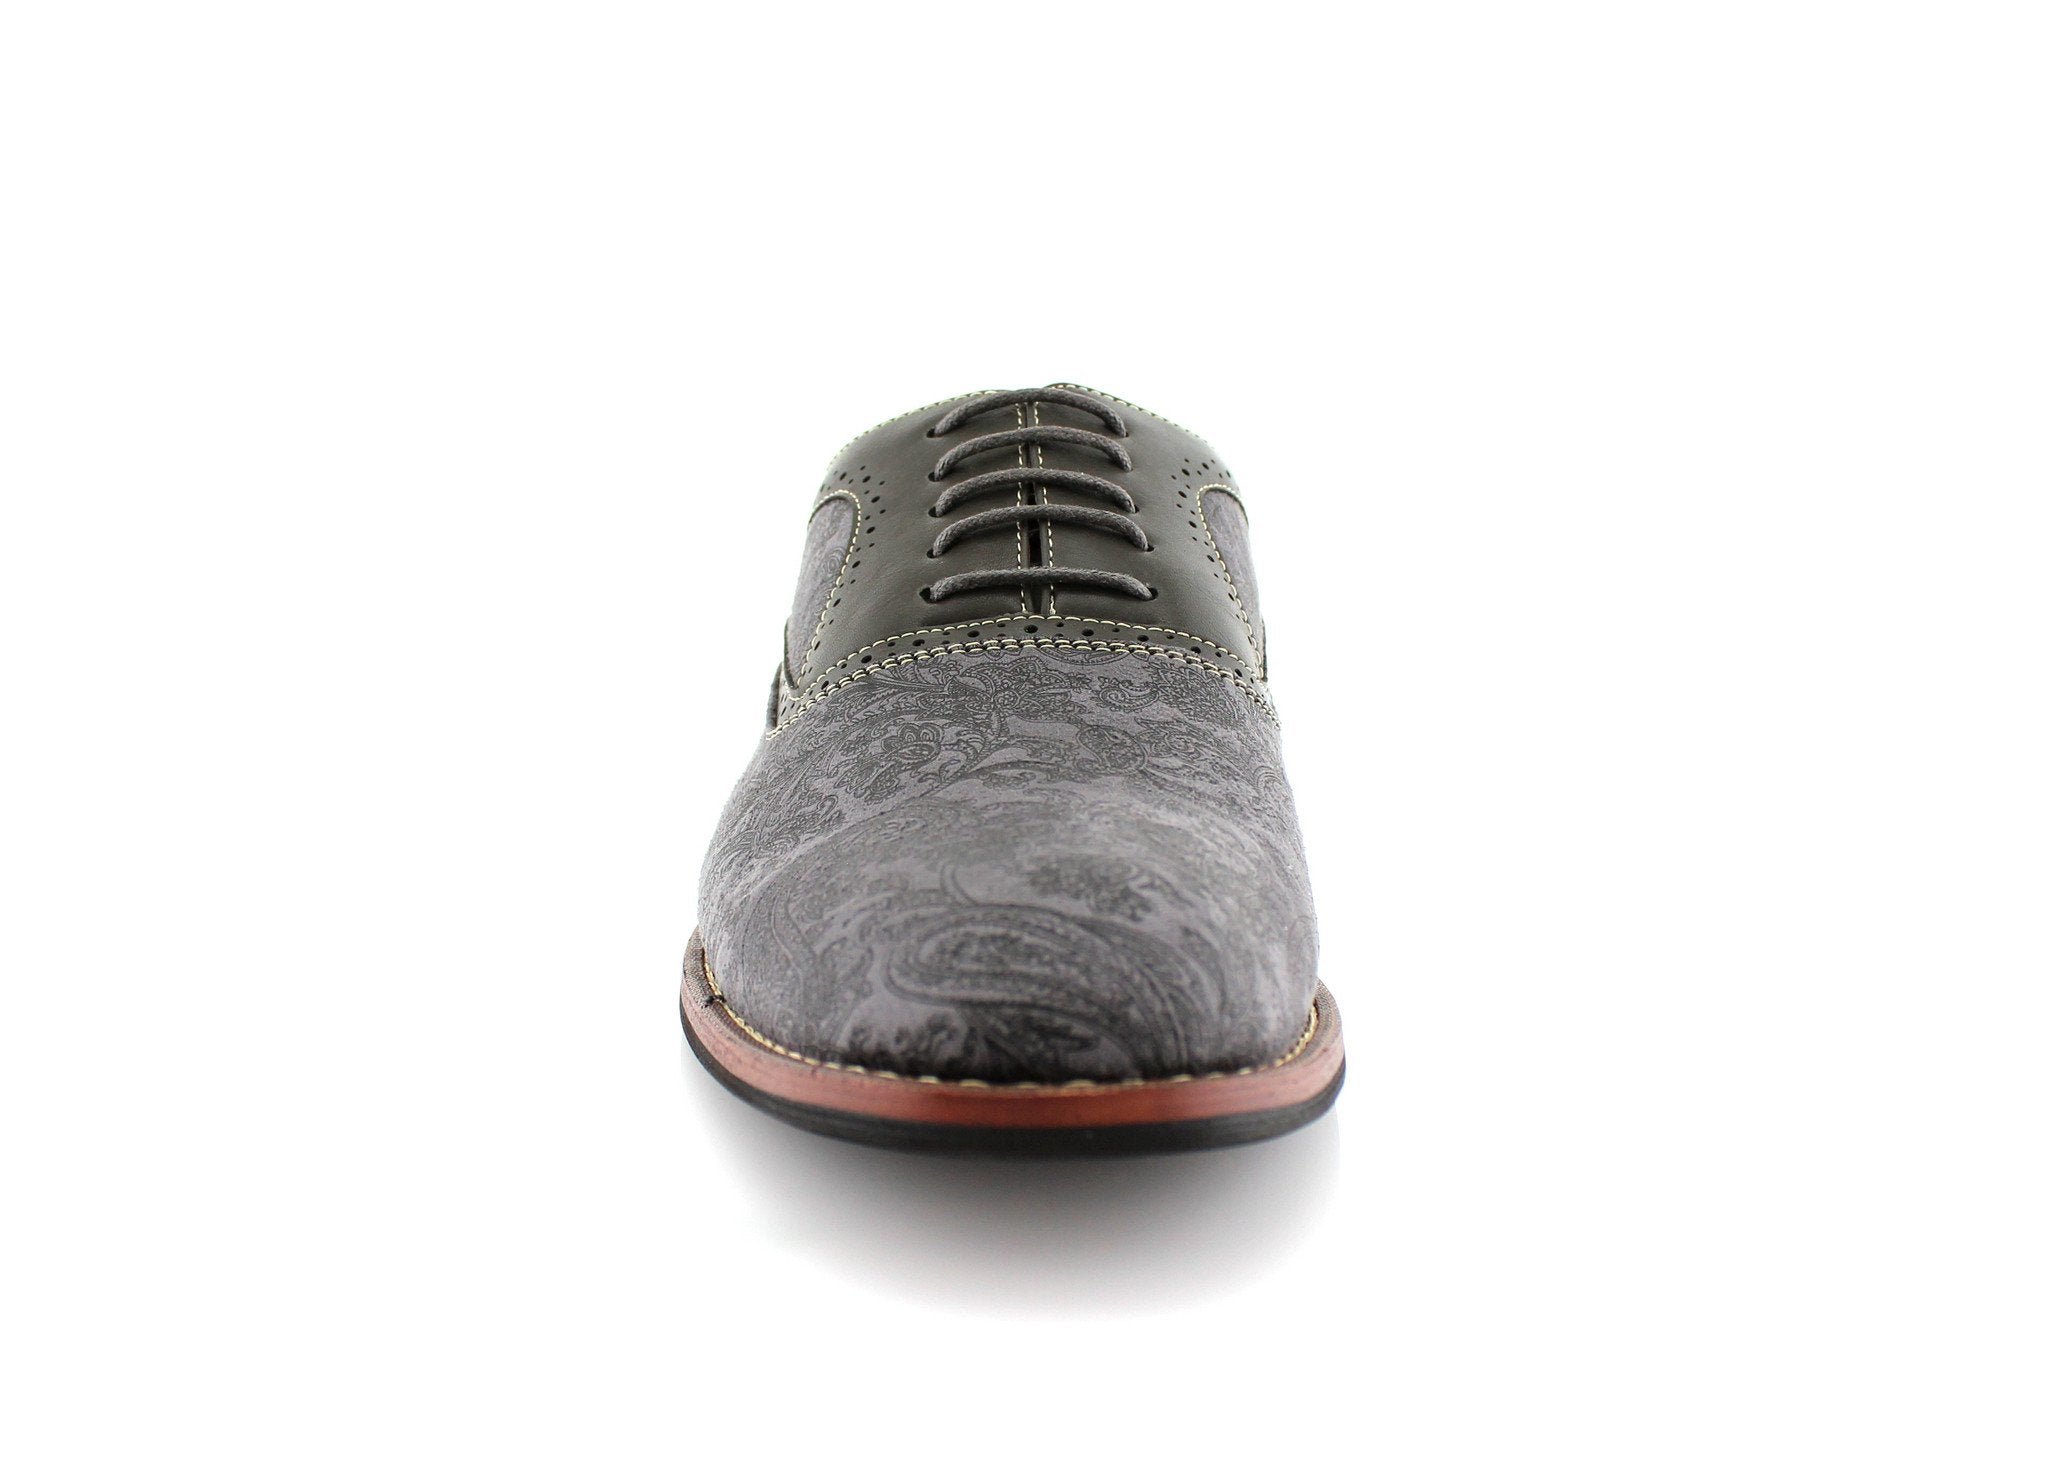 Paisley Pattern Brogue Oxfords | Scott by Ferro Aldo | Conal Footwear | Front Angle View